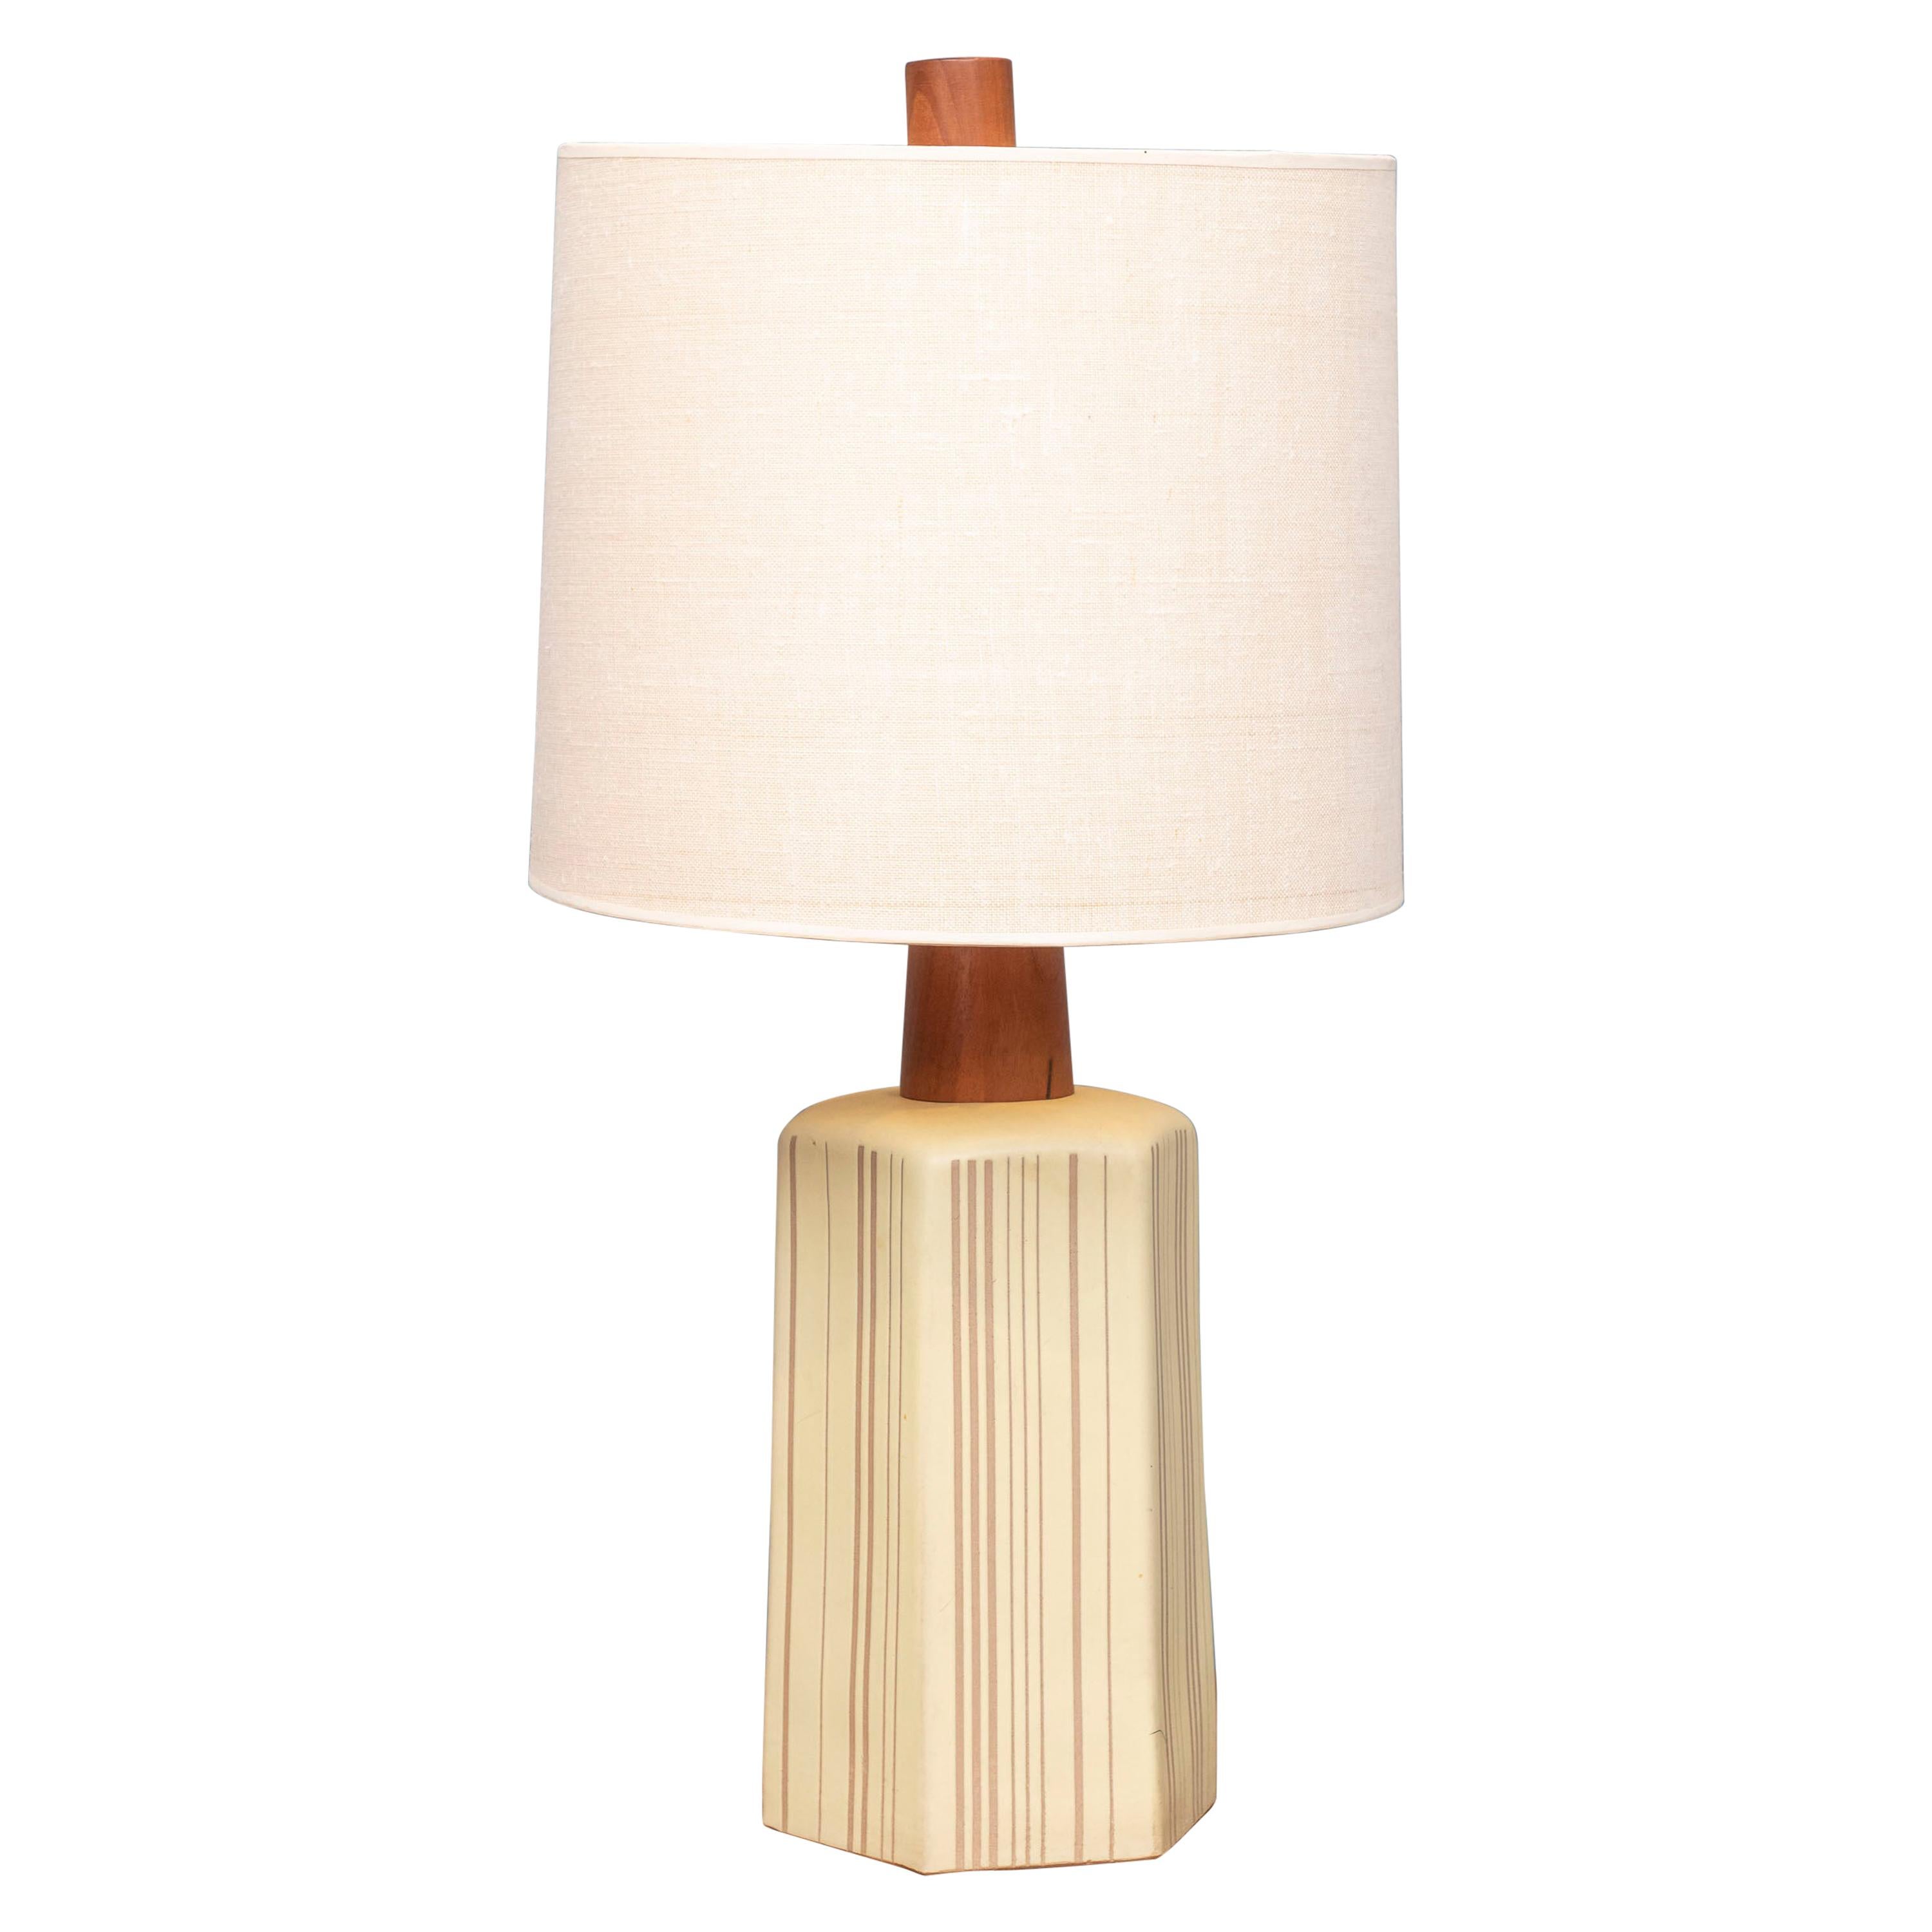 Gordon Martz Ceramic Table Lamp